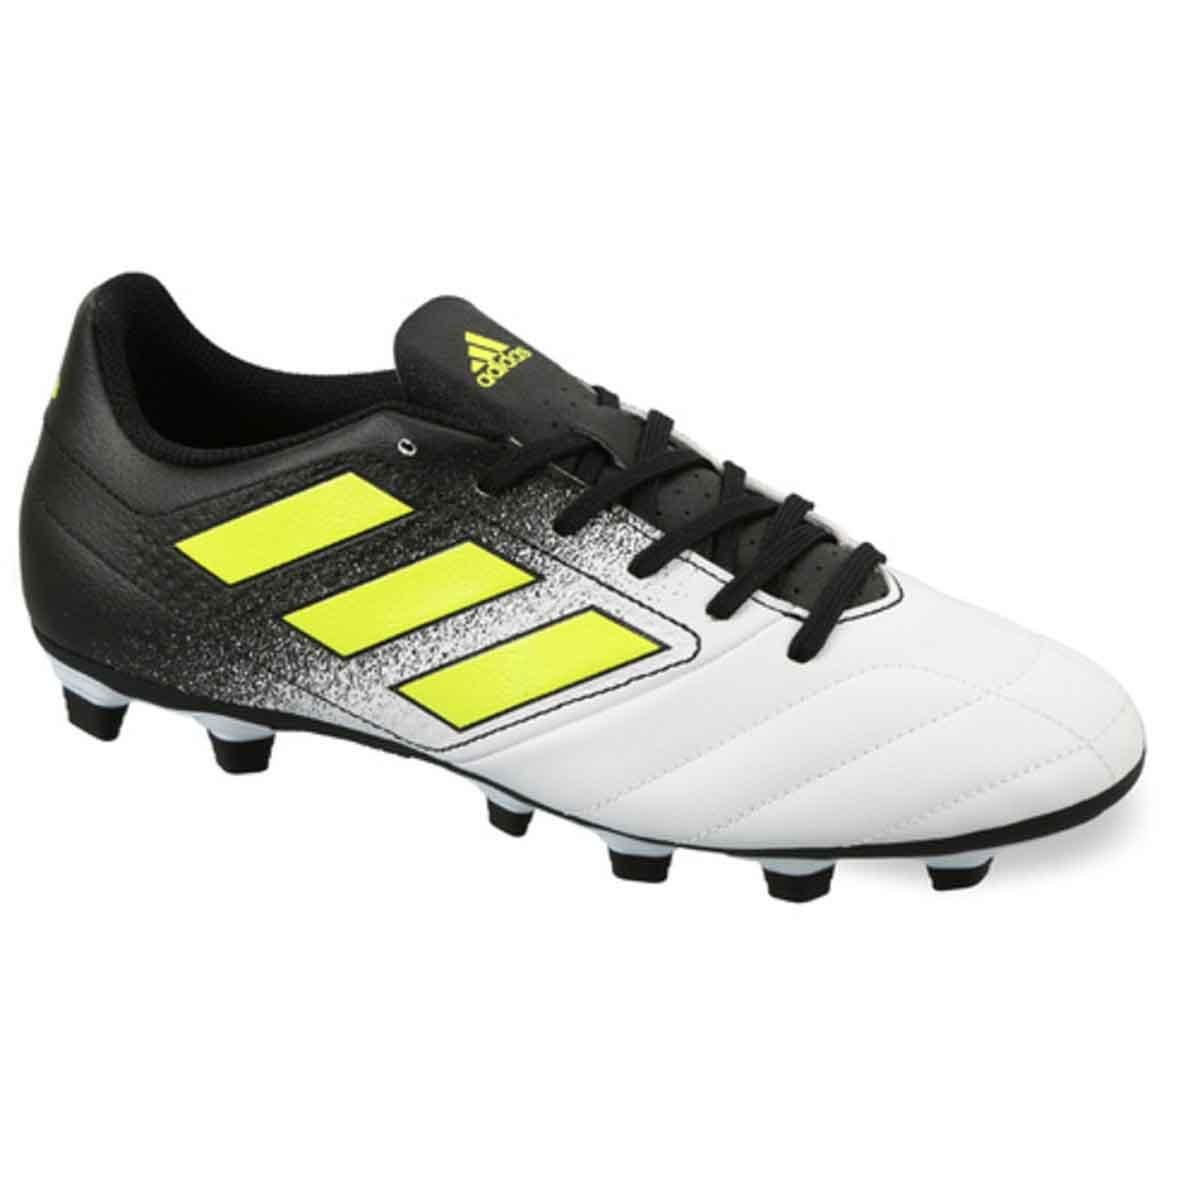 Buy Adidas 17.4 FXG Football Shoes (White/Yellow/Black) Online